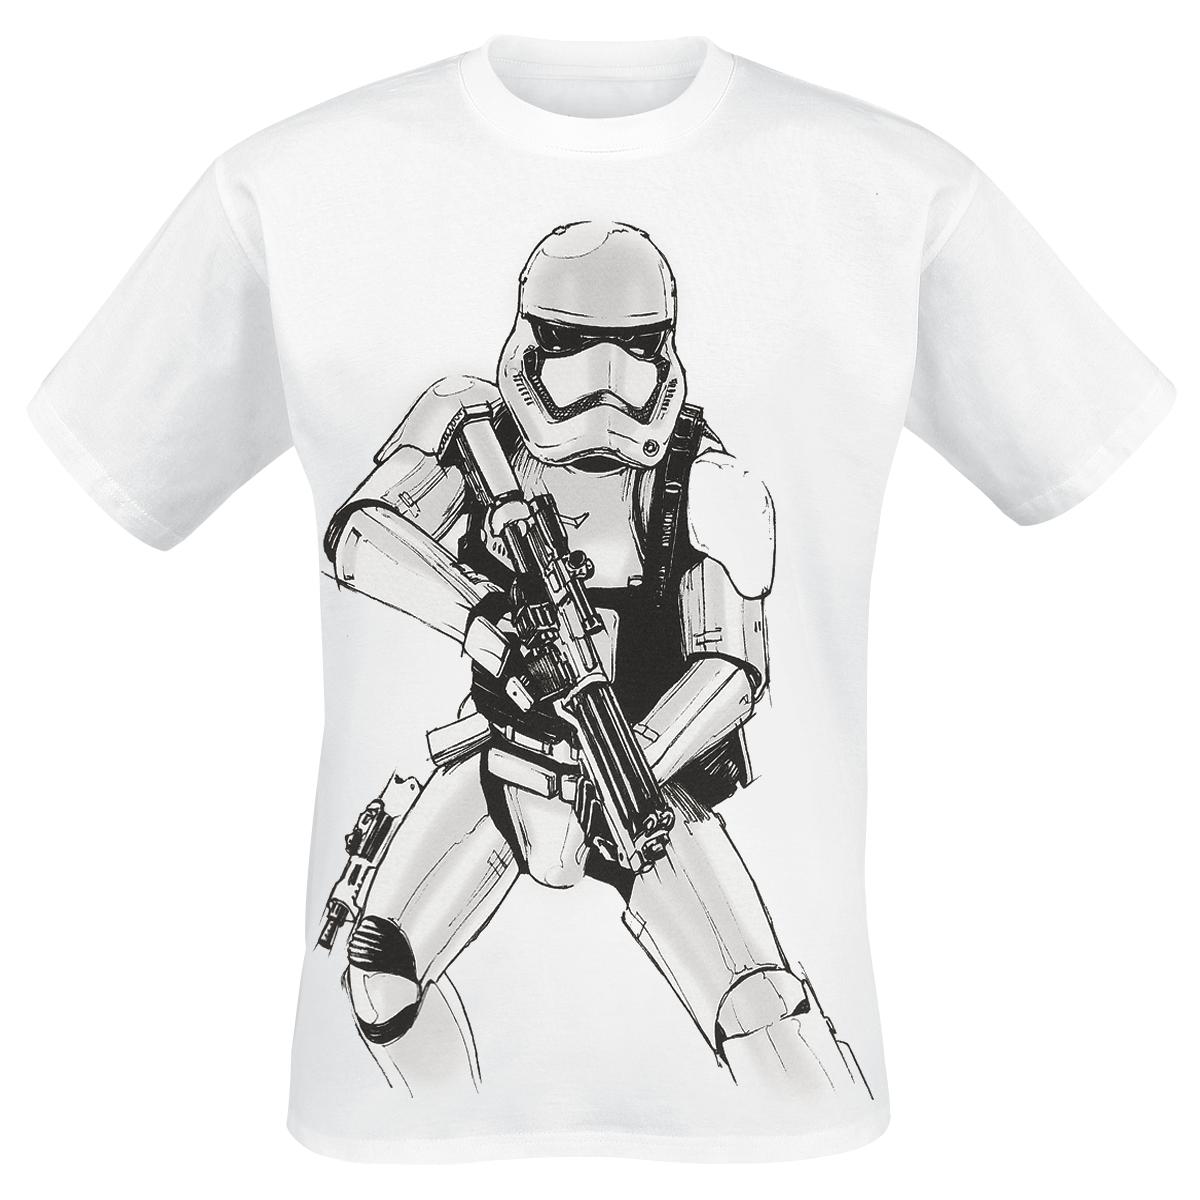 episode-7-the-force-awakens-armed-stormtrooper-t-shirt-design-tee